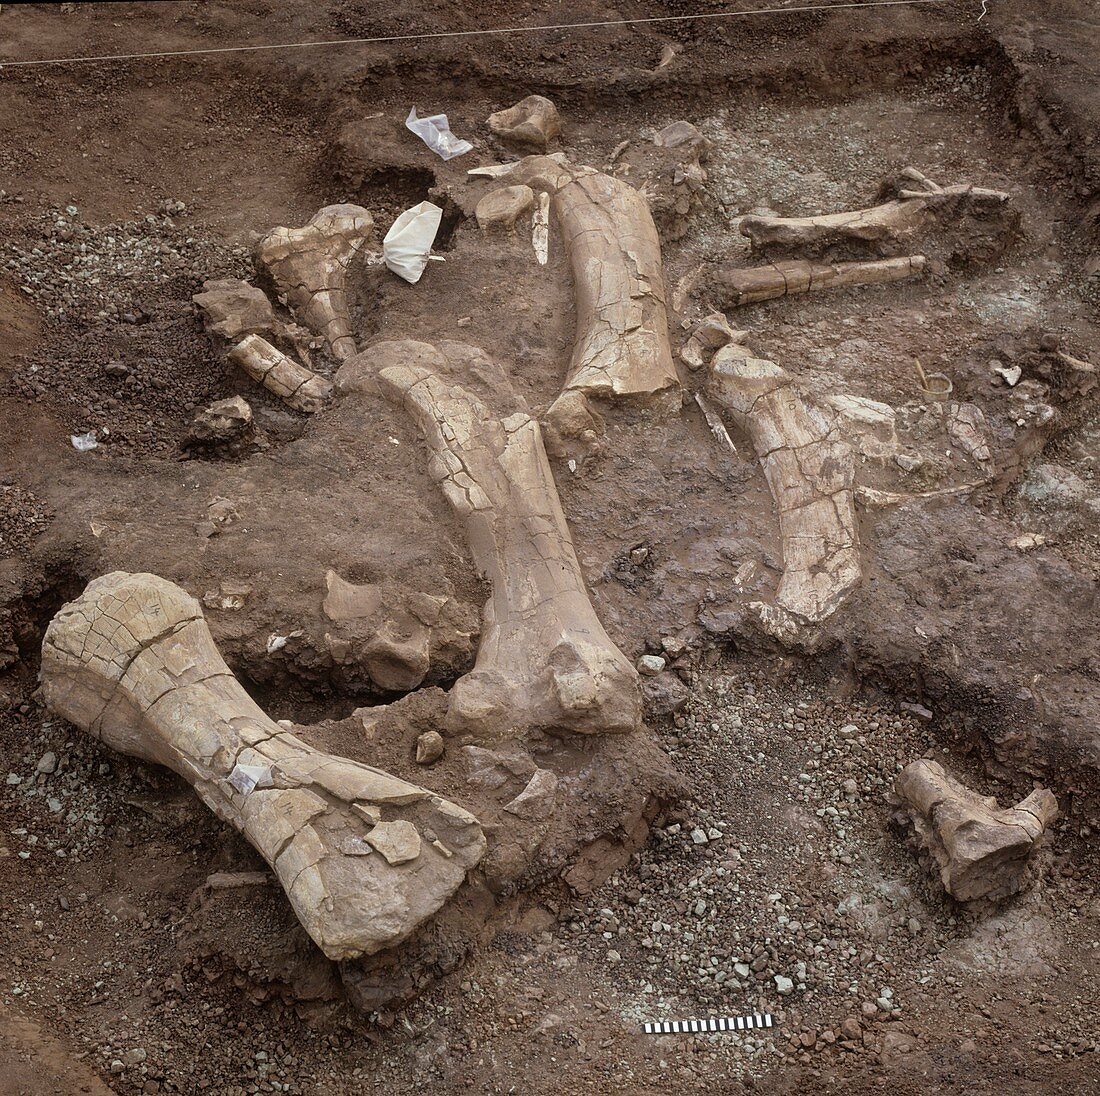 Rebbachisaurus fossil excavation,1988